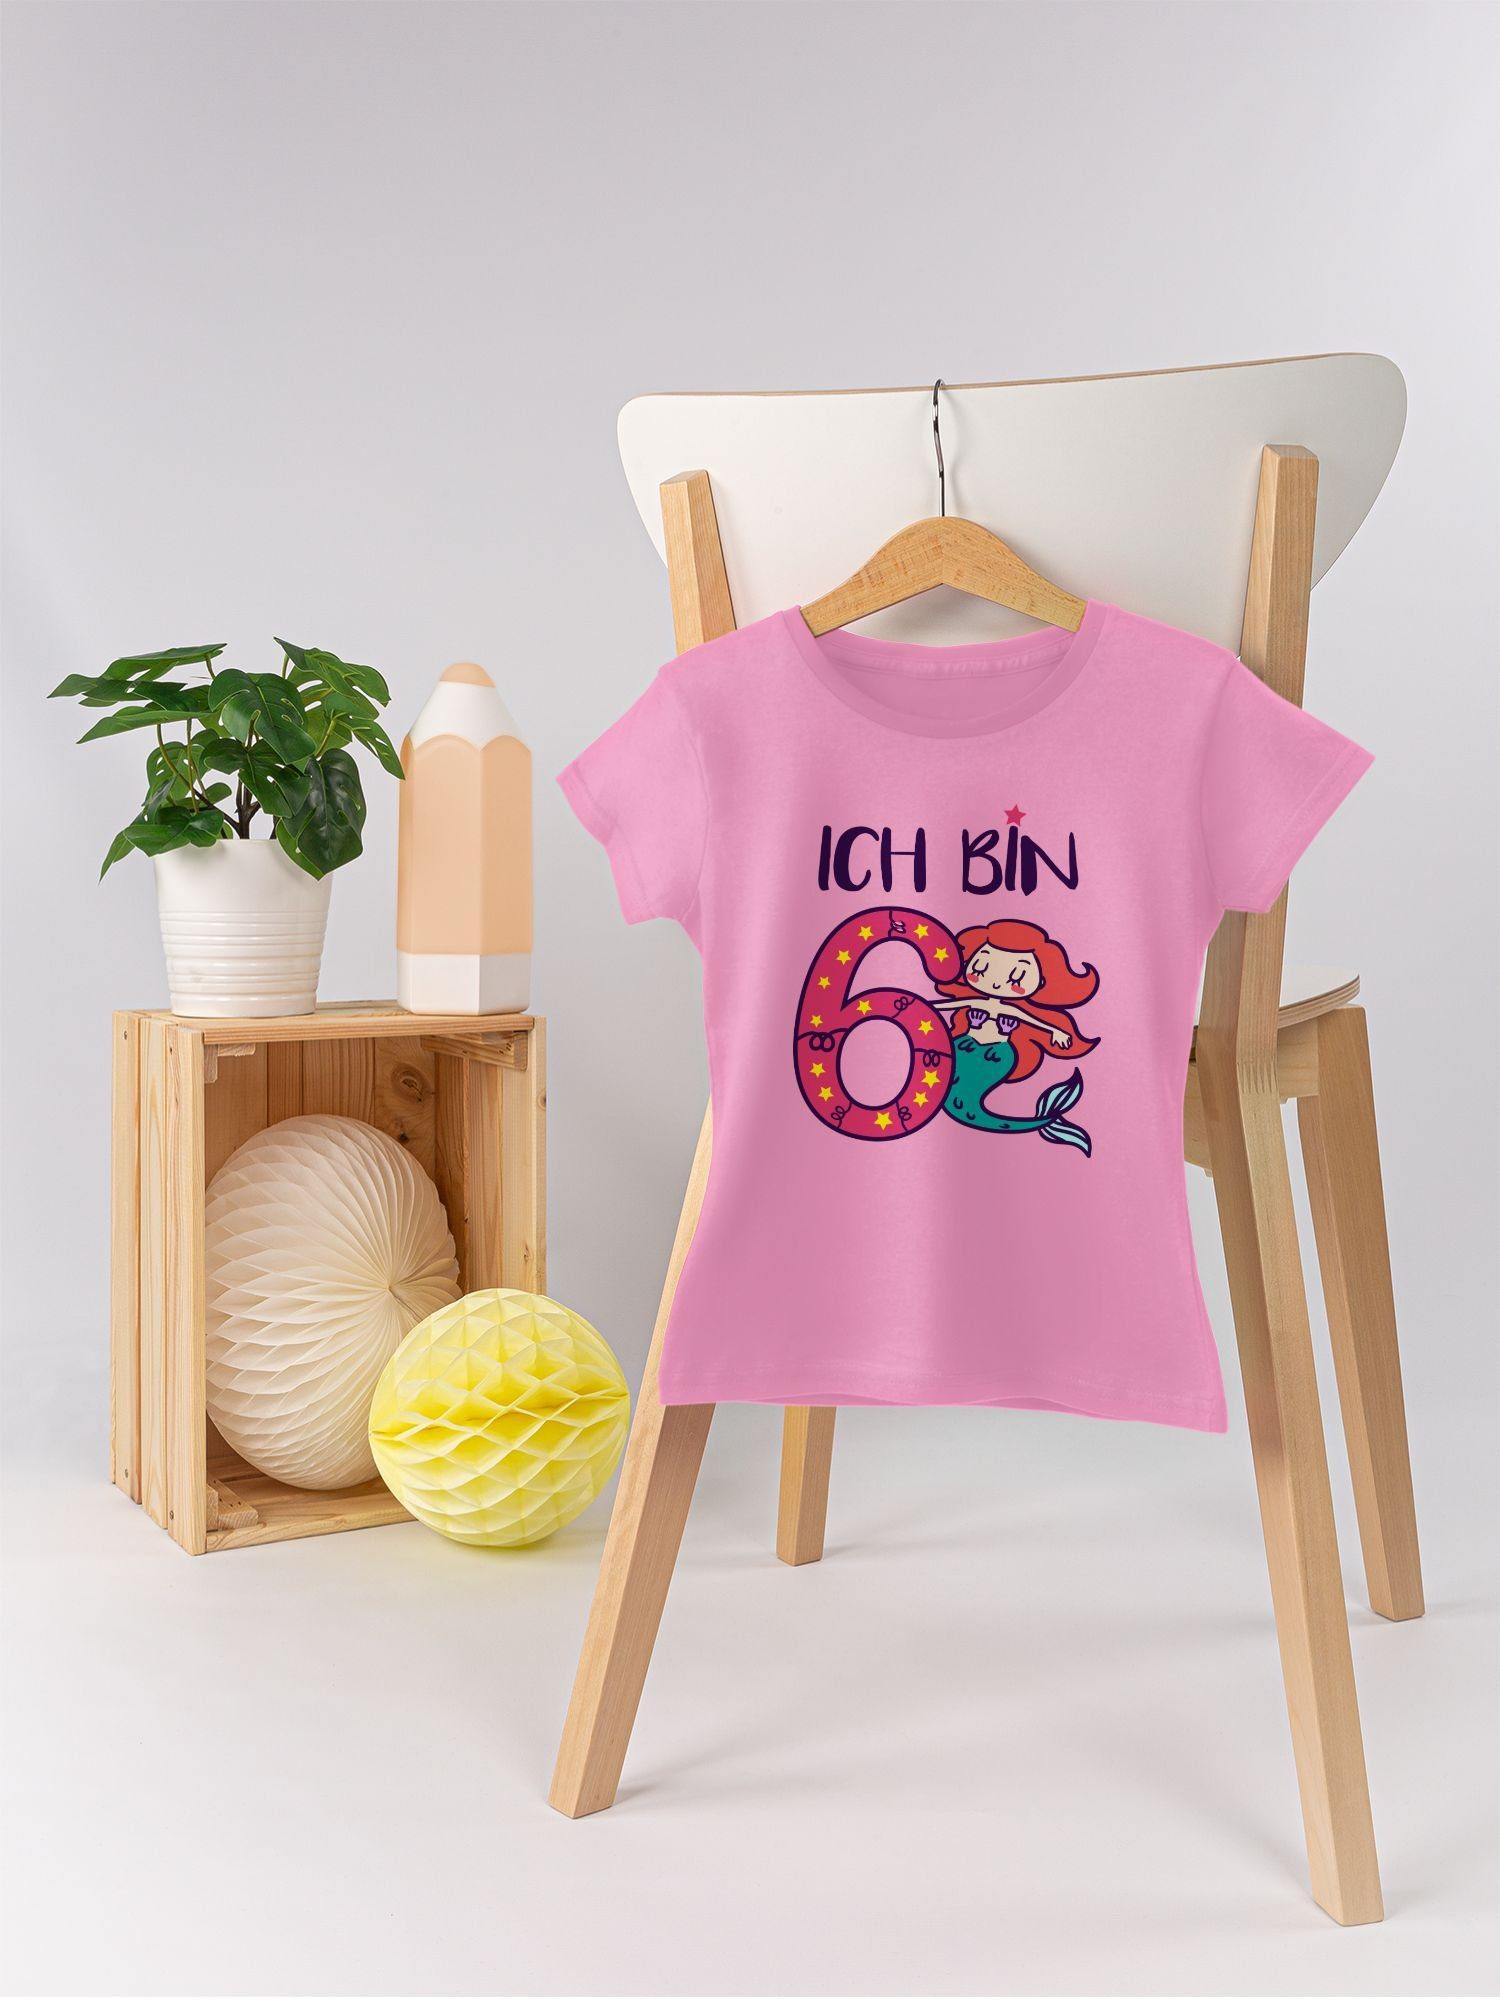 1 bin Ich sechs T-Shirt Shirtracer Meerjungfrau Geburtstag Rosa 6.